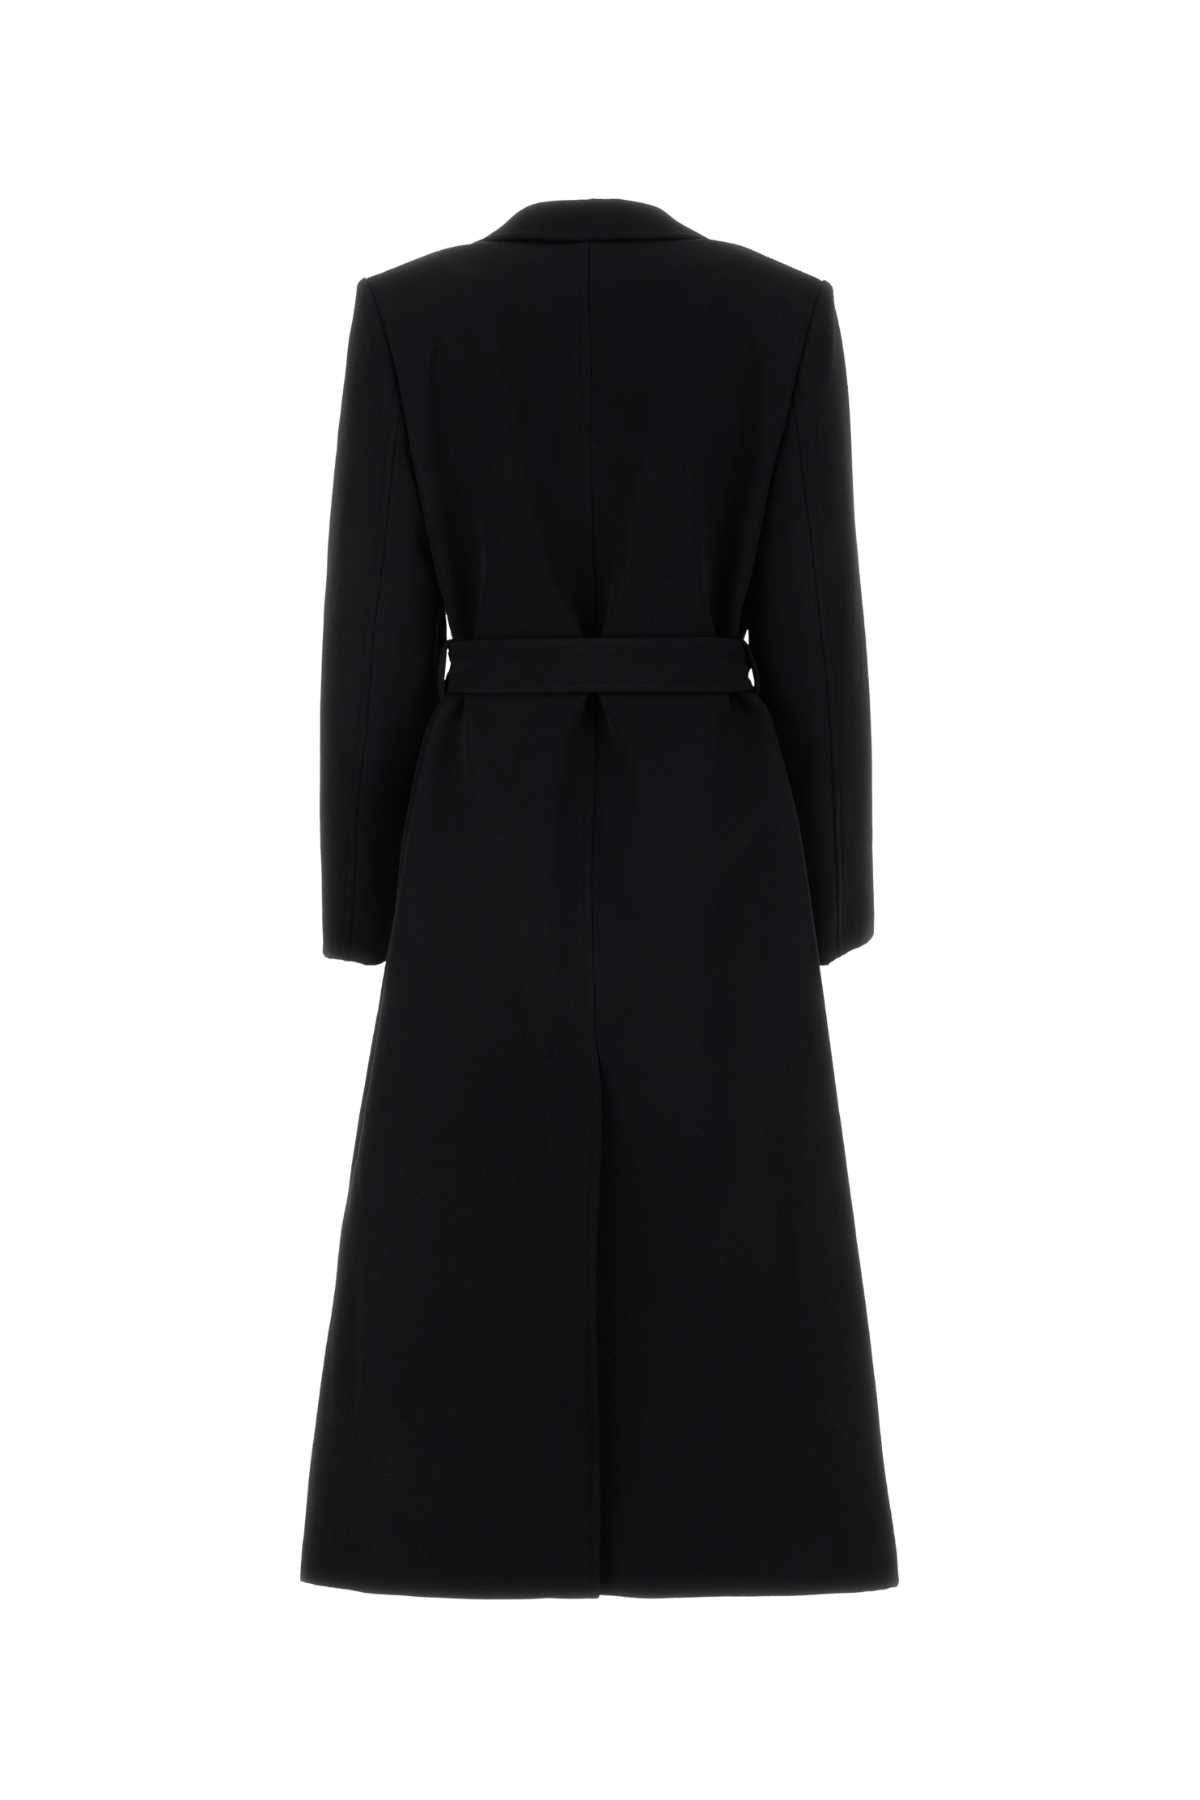 Chloé Black Gabardine Coat